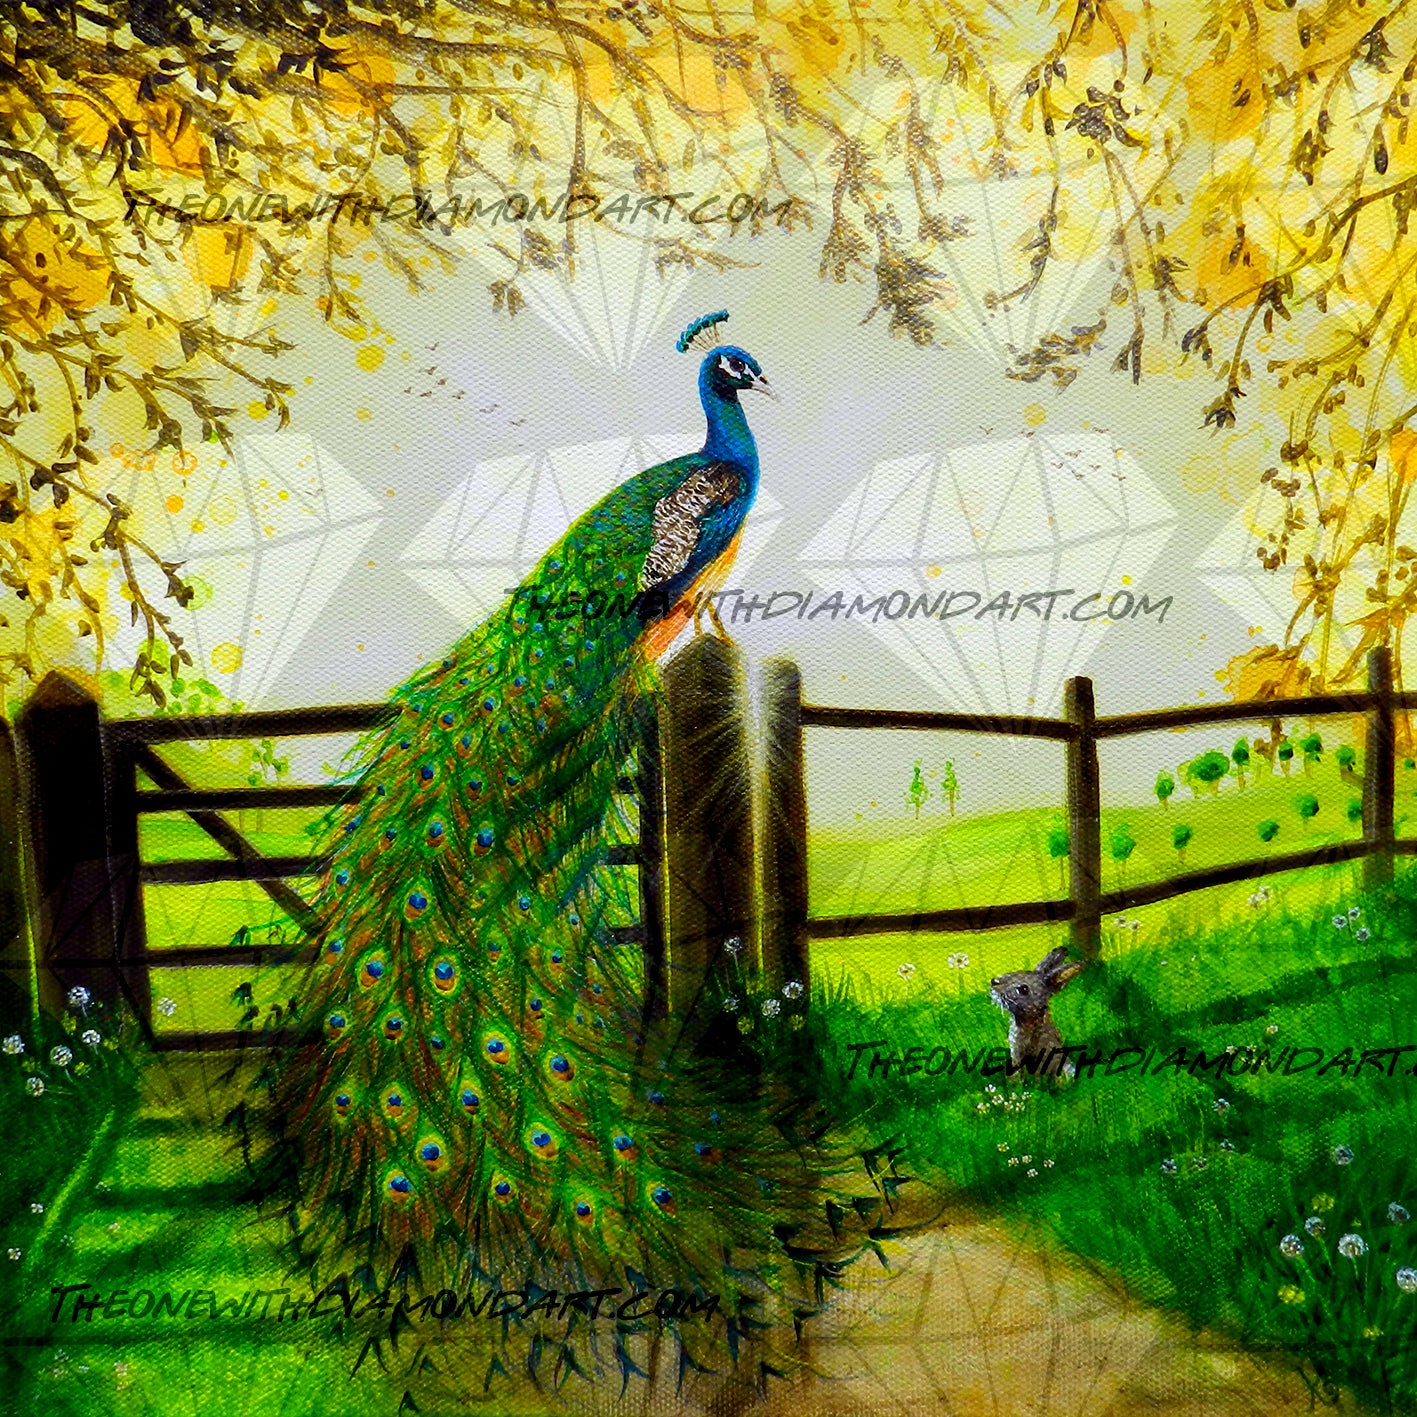 A Free Kingdom ©River Peacock